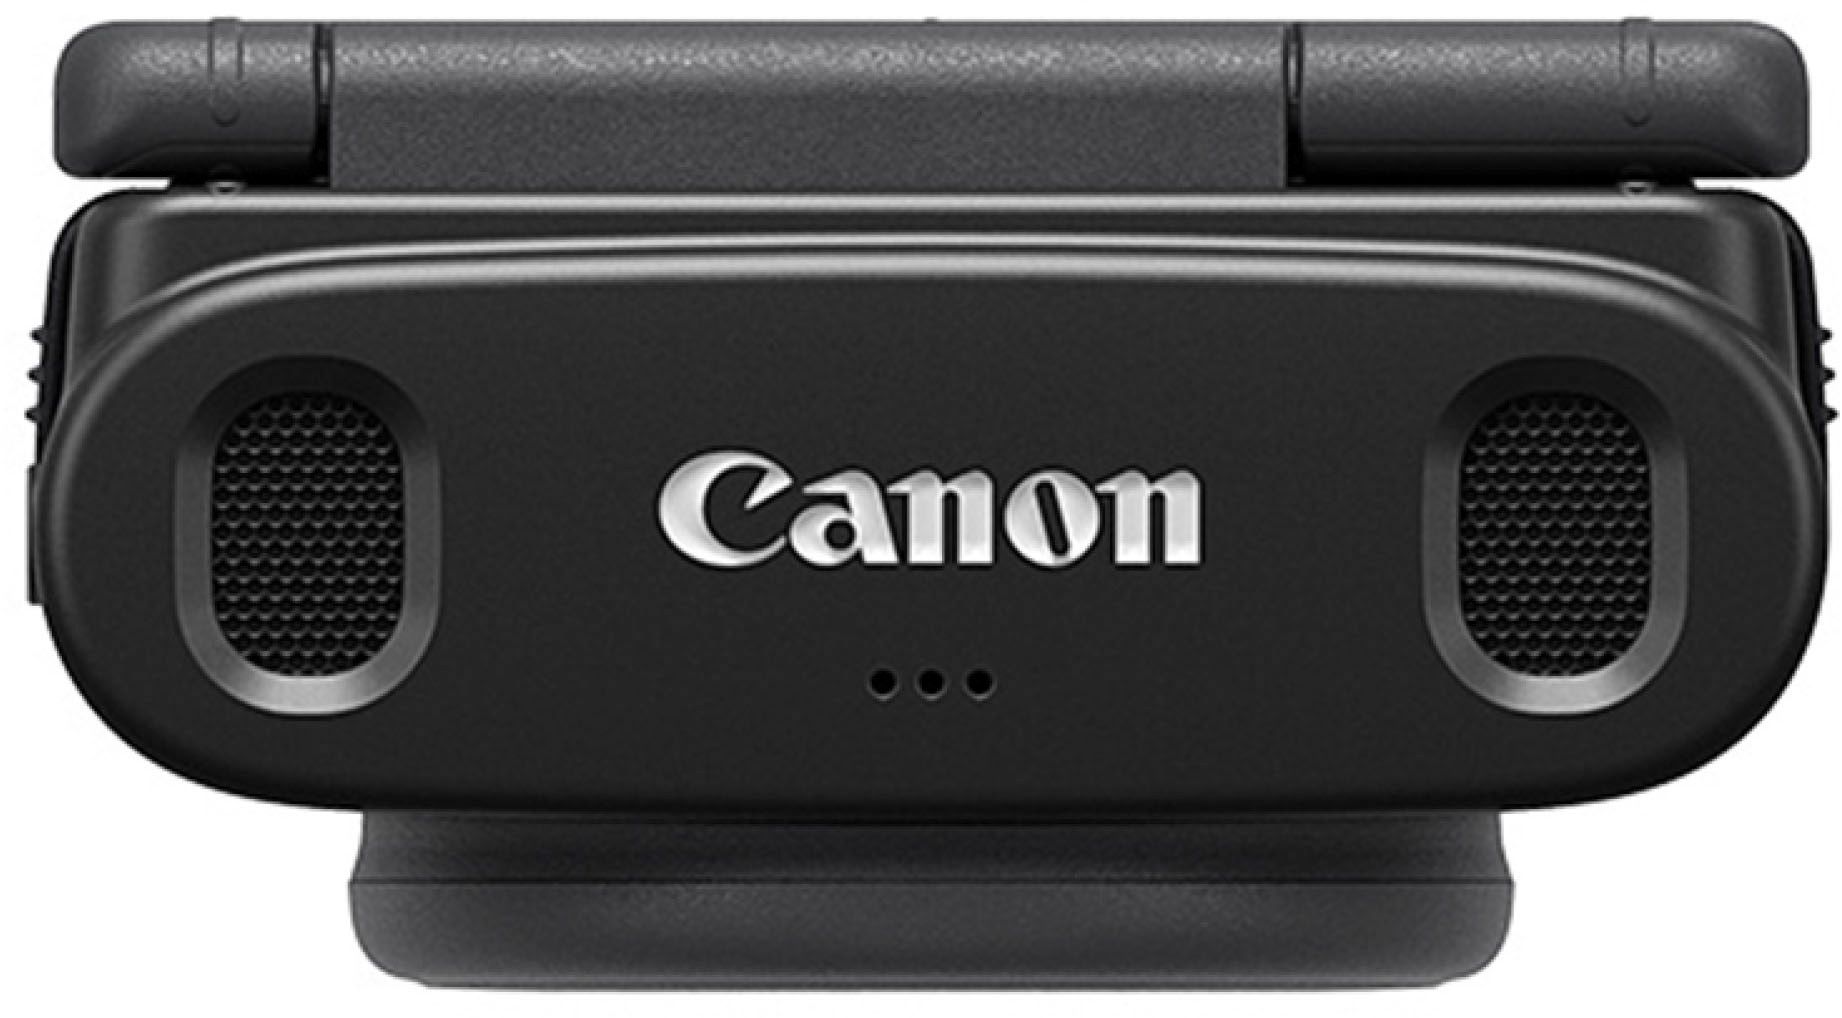 Canon PowerShot V10 4K Video 20.9-Megapixel Digital Camera for